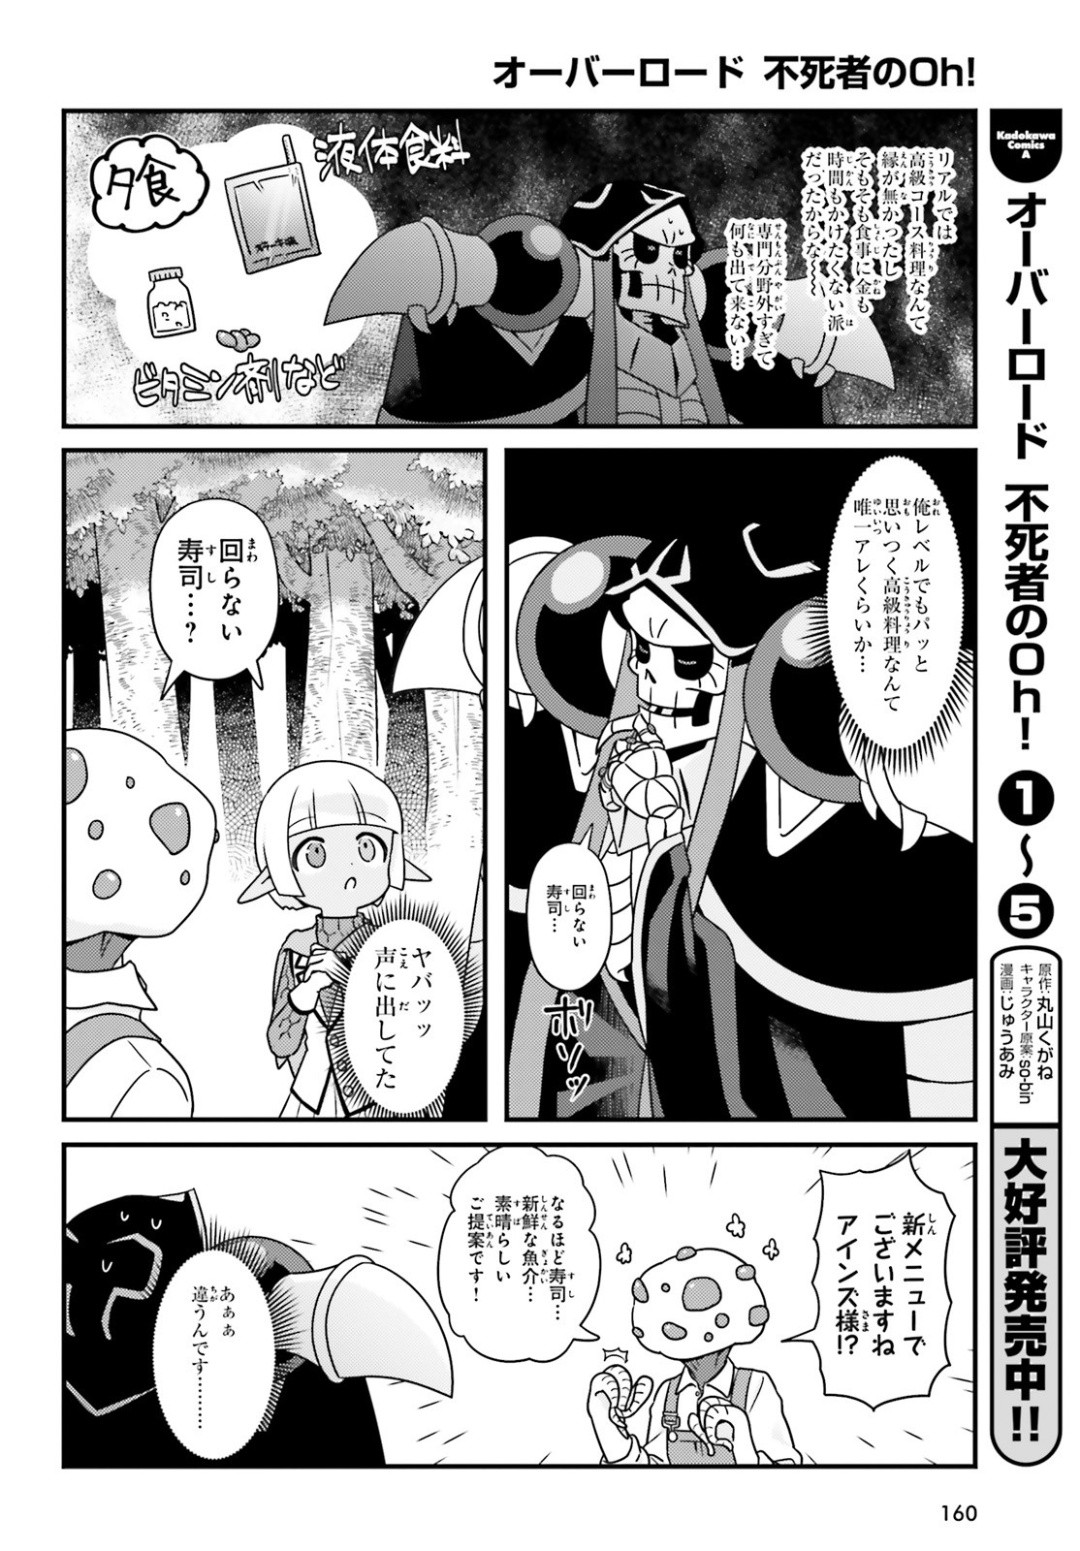 Overlord-Fushisha-no-Oh - Chapter 35 - Page 4